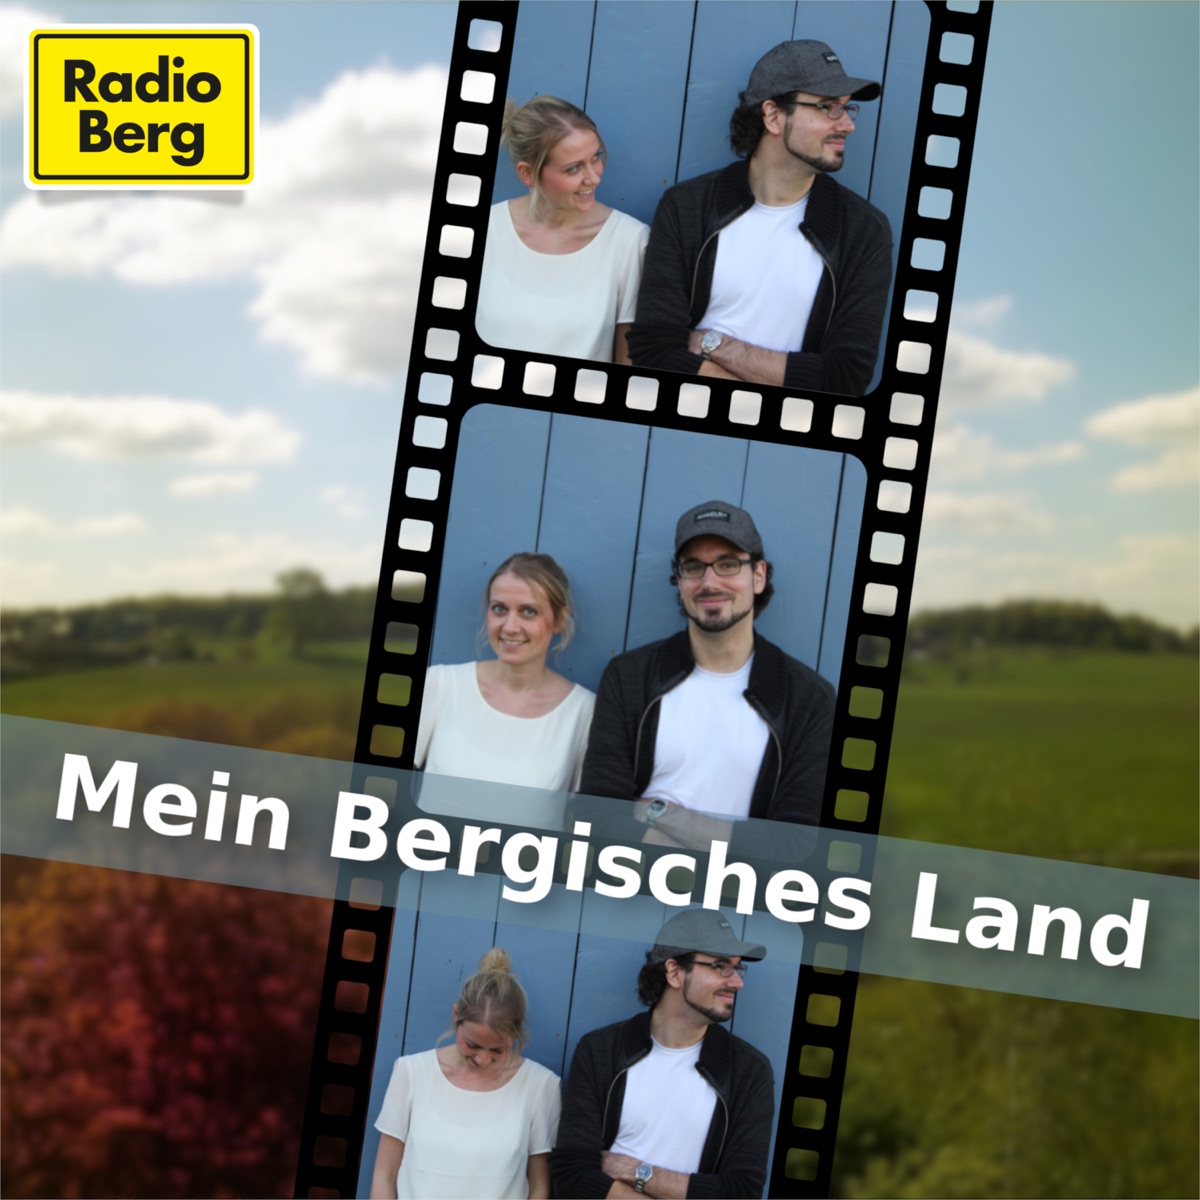 Mein bergisches Land - Single - Album by Radio Berg Songs - Apple Music